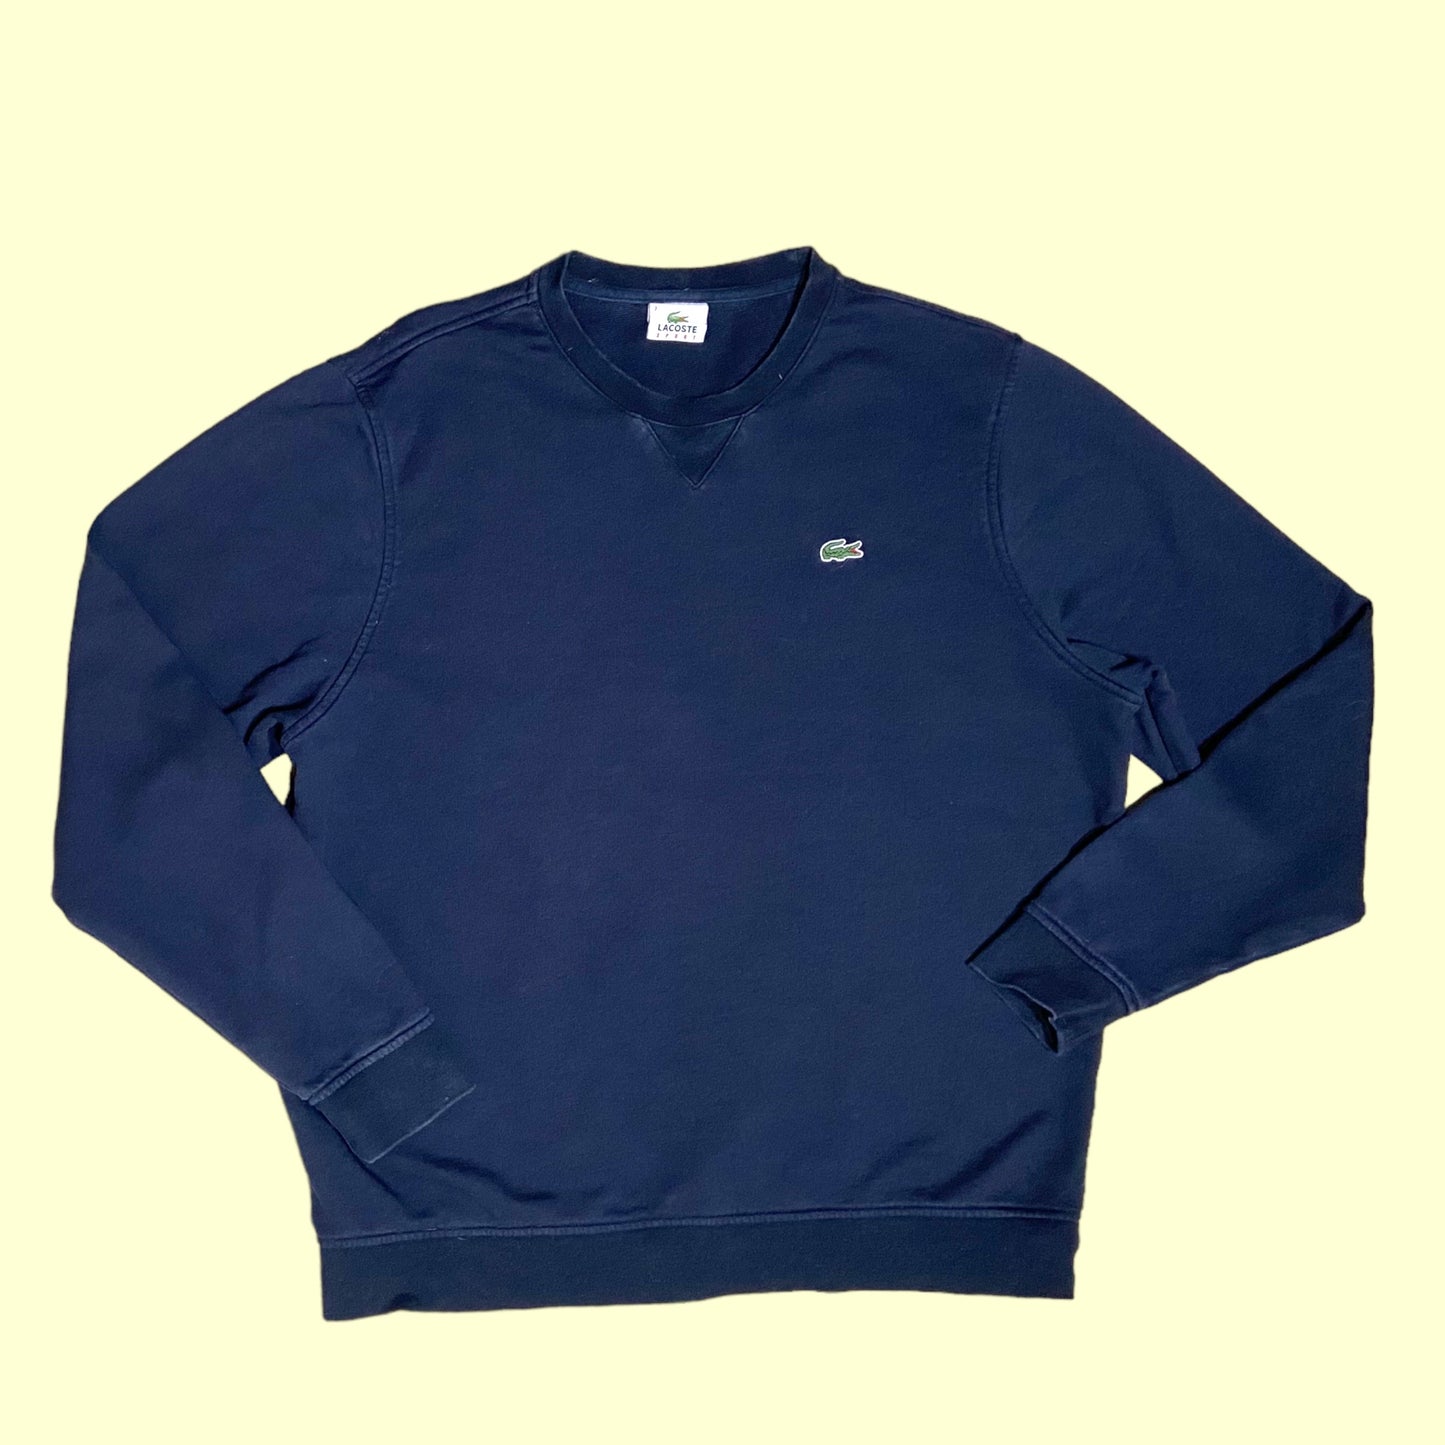 Vintage Lacoste sweater - 2XL